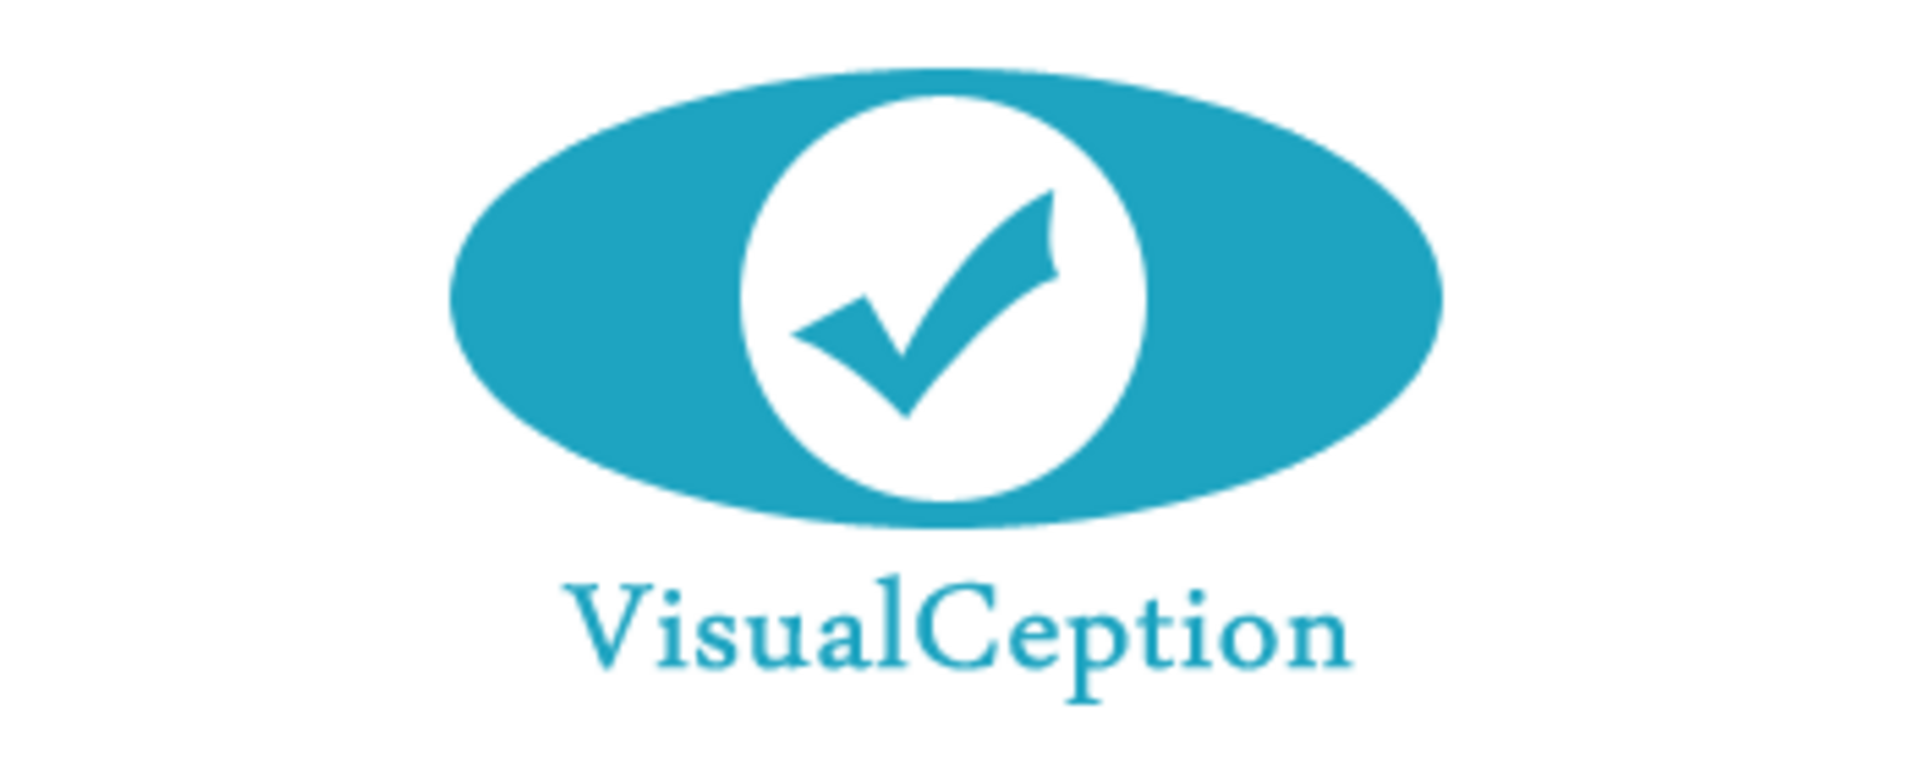 Visualception